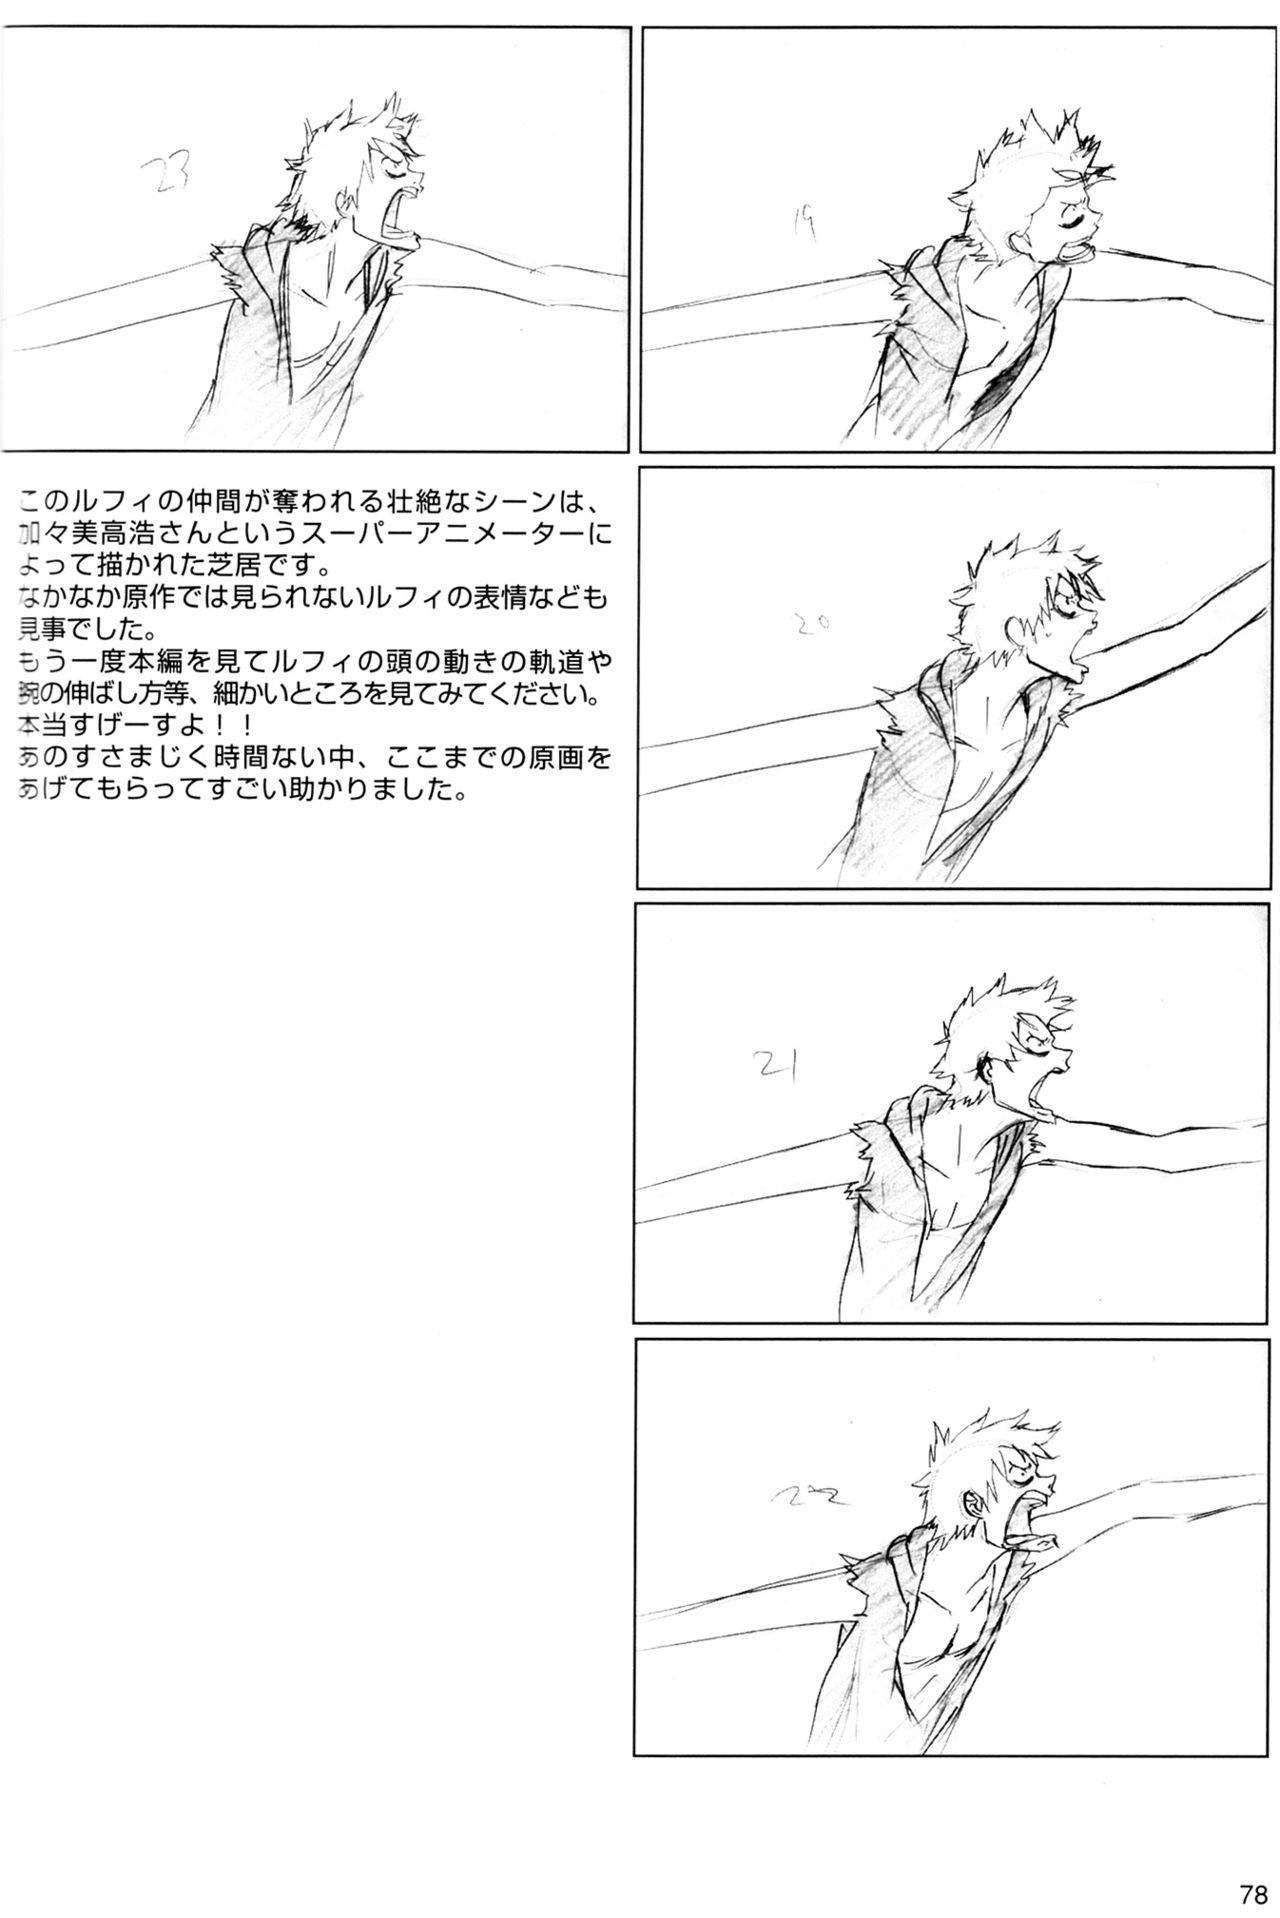 [Artbook] Sushio One Piece Movie 06 - Pencil Test and Design Book 76